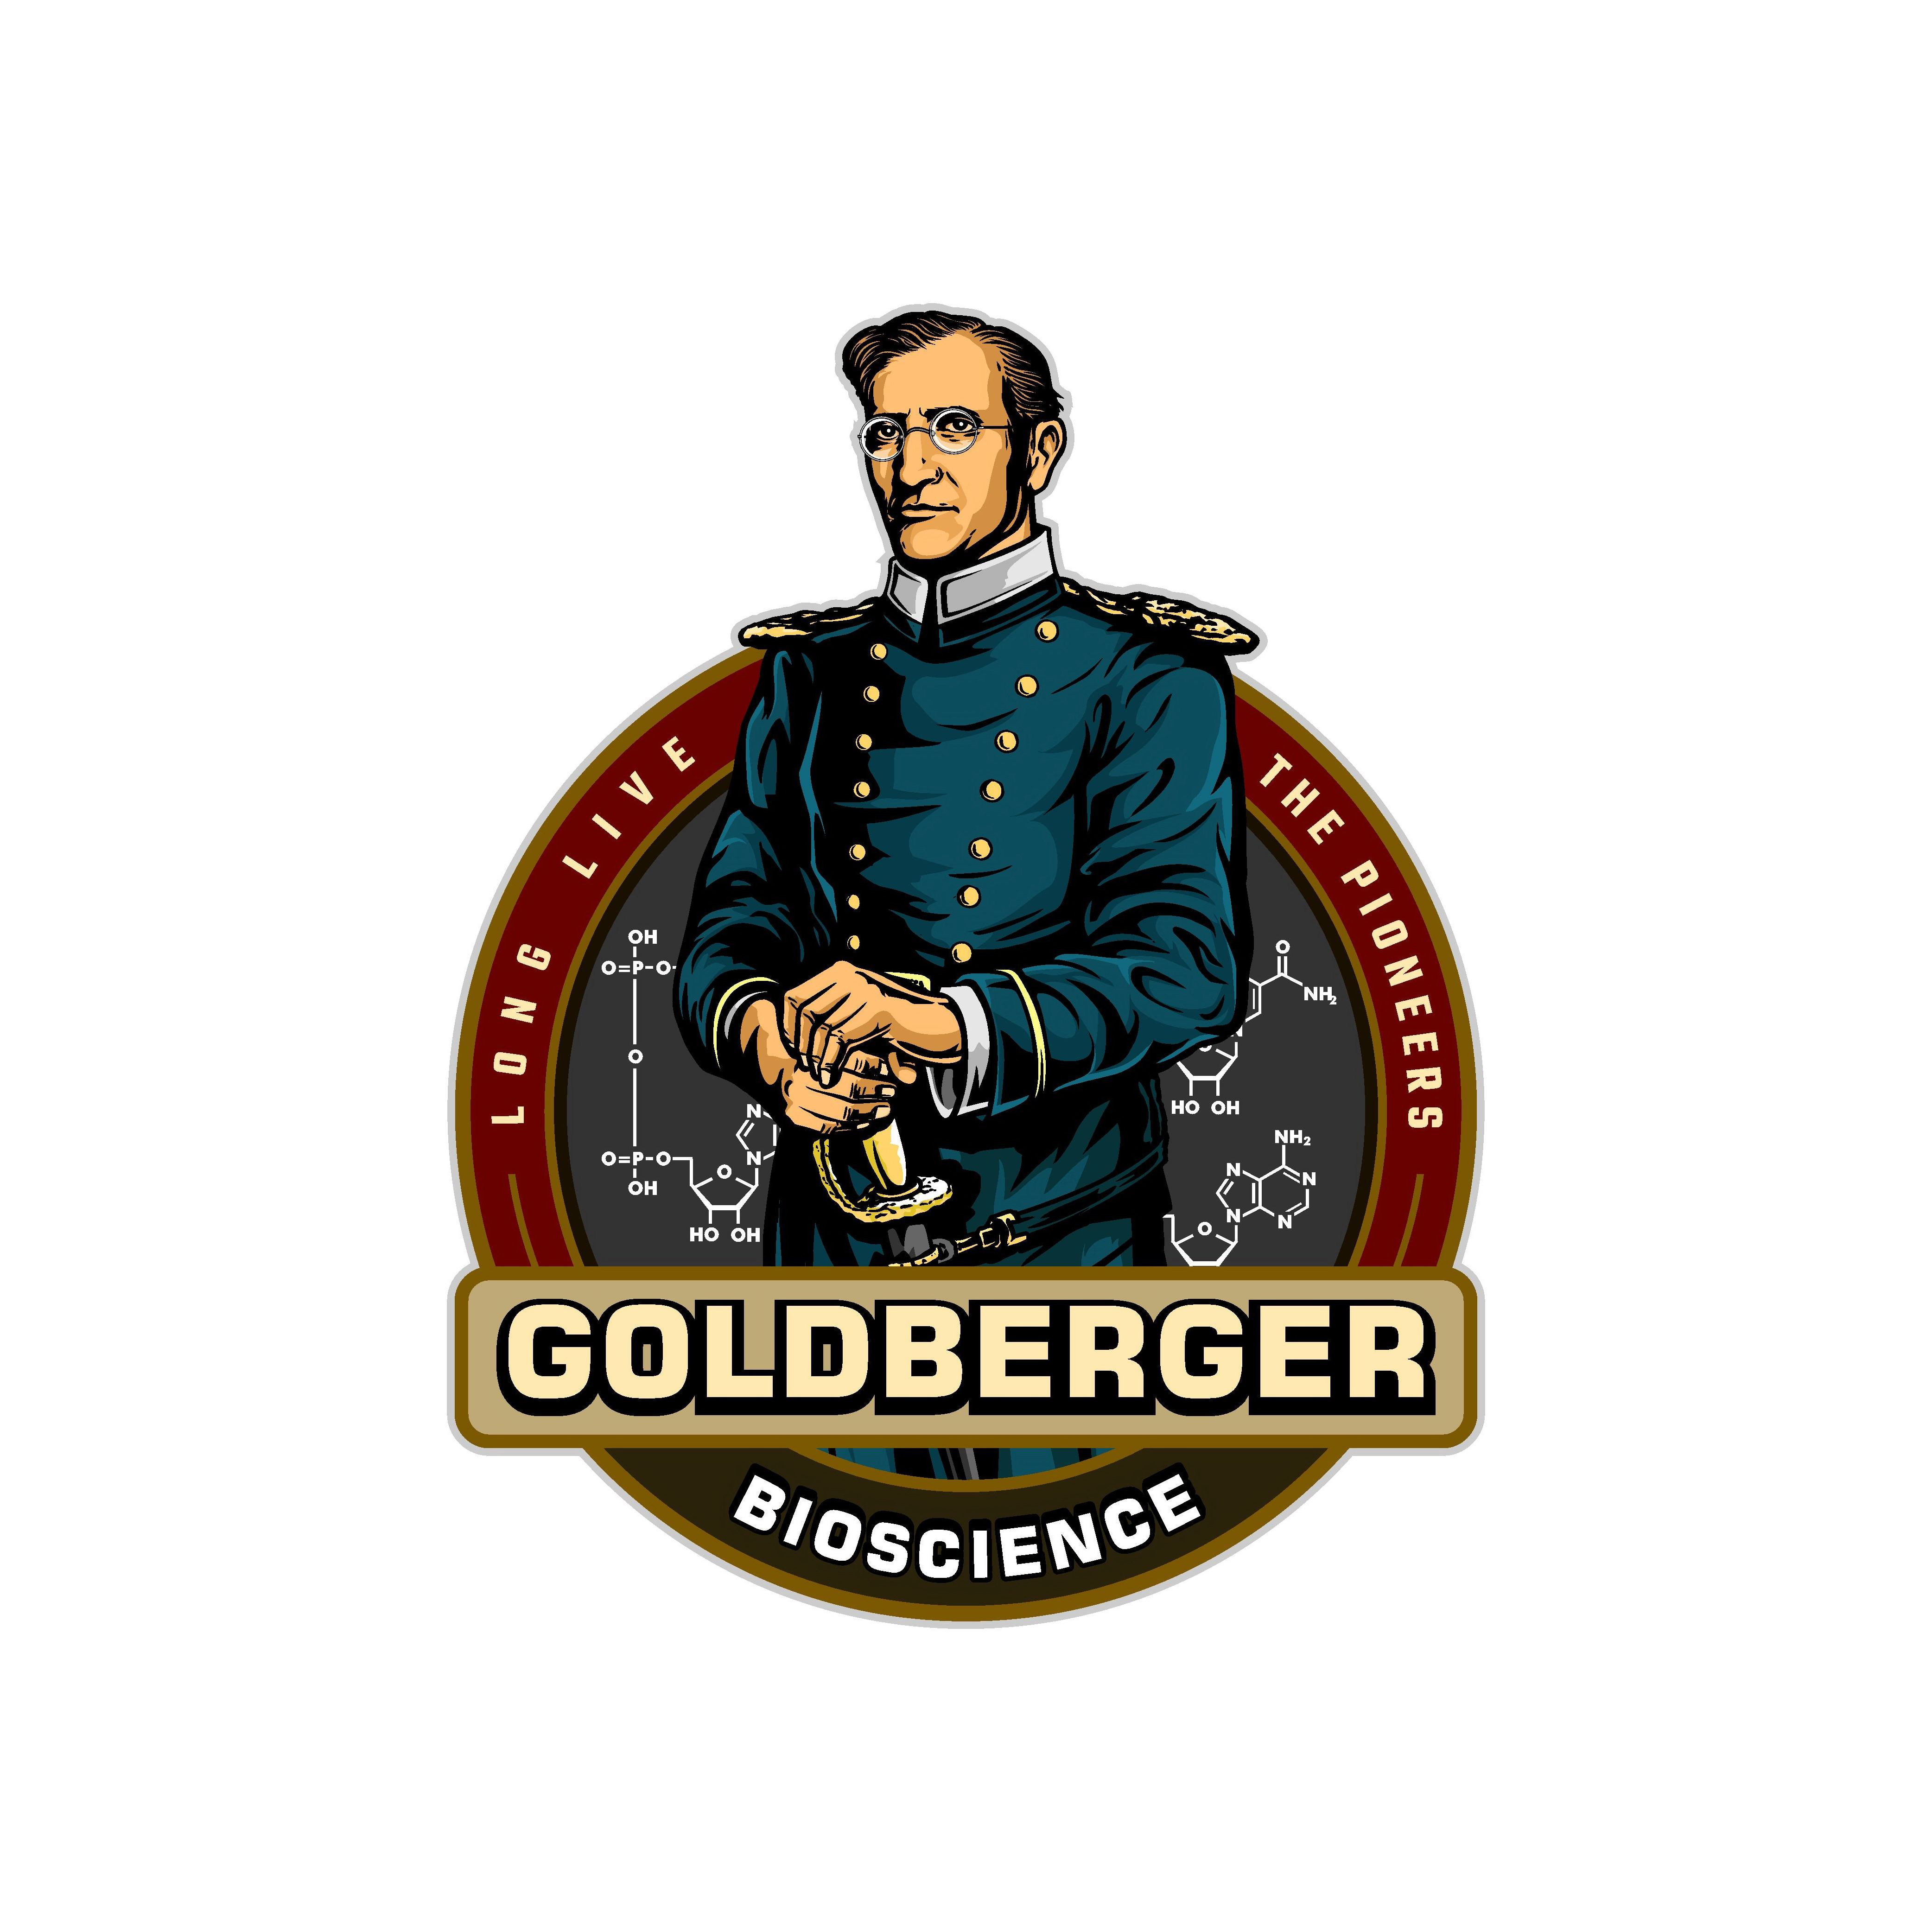  GOLDBERGER BIOSCIENCE LONG LIVE THE PIONEERS